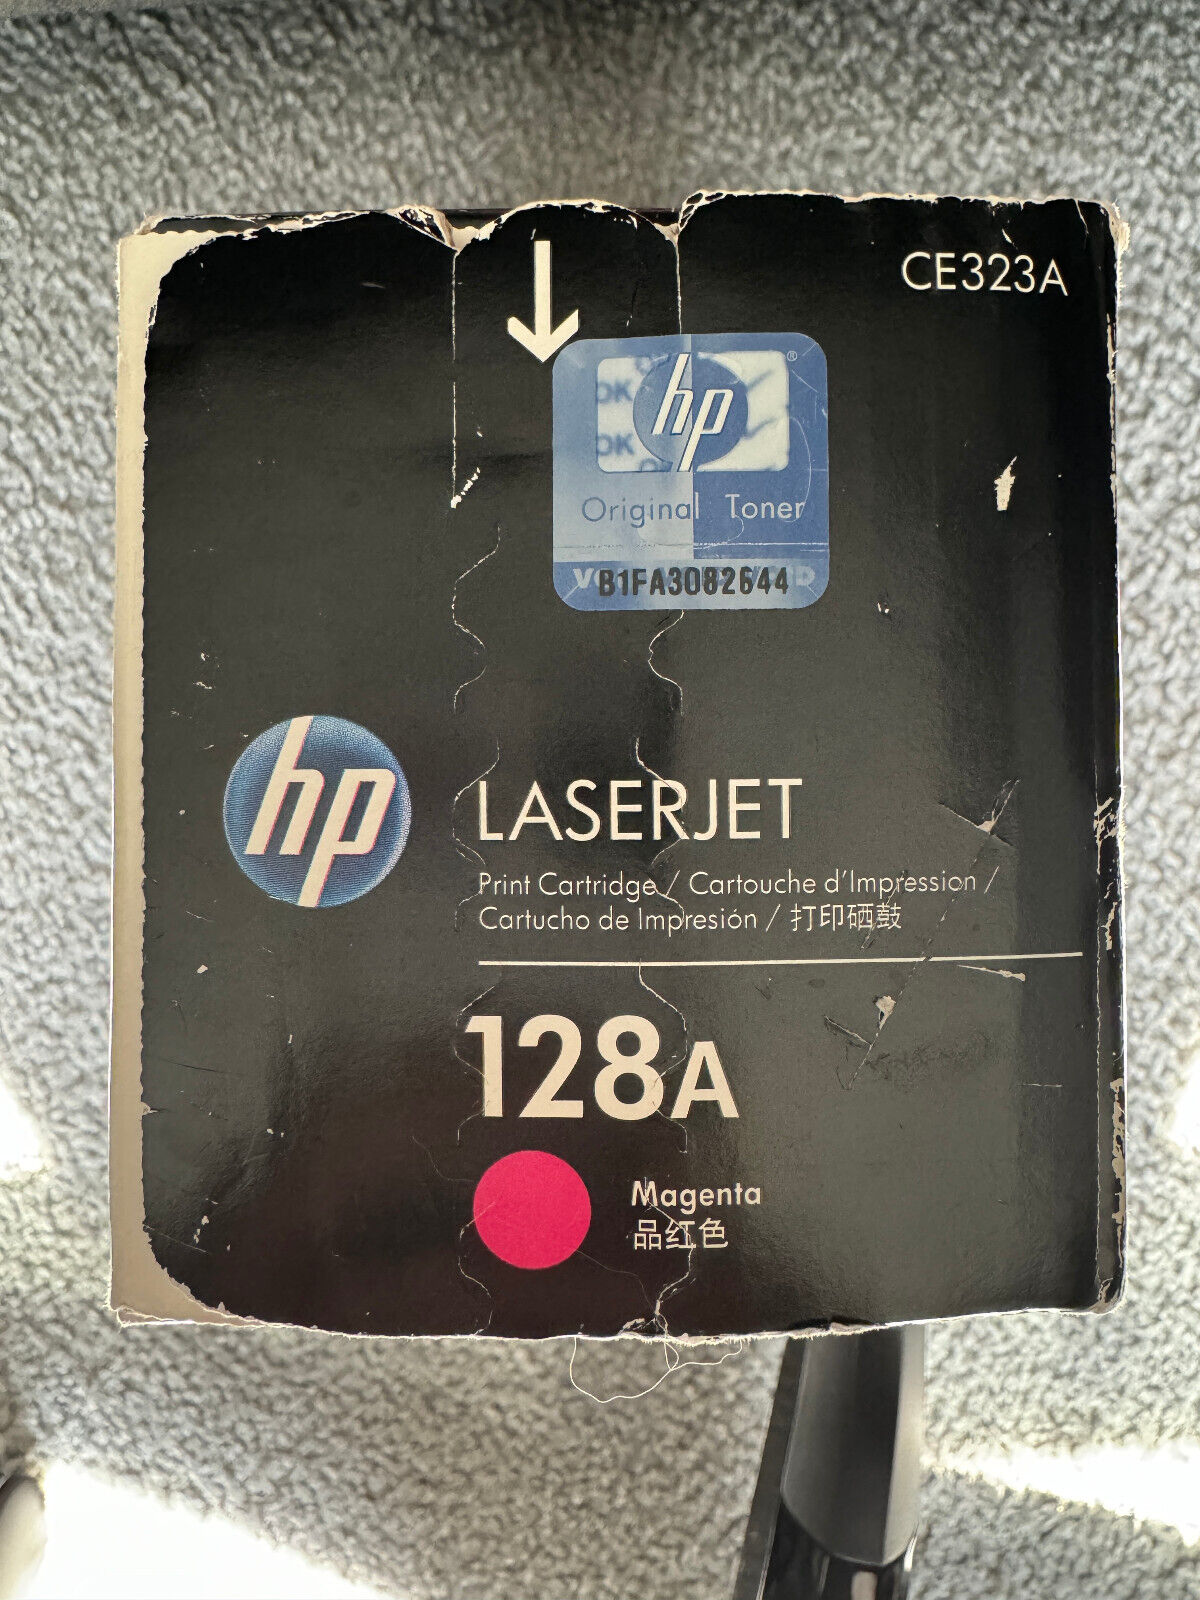 HP 128A Magenta(CE323A) Toner Cartridge - HP LasetJet Pro CM1415, CP1525